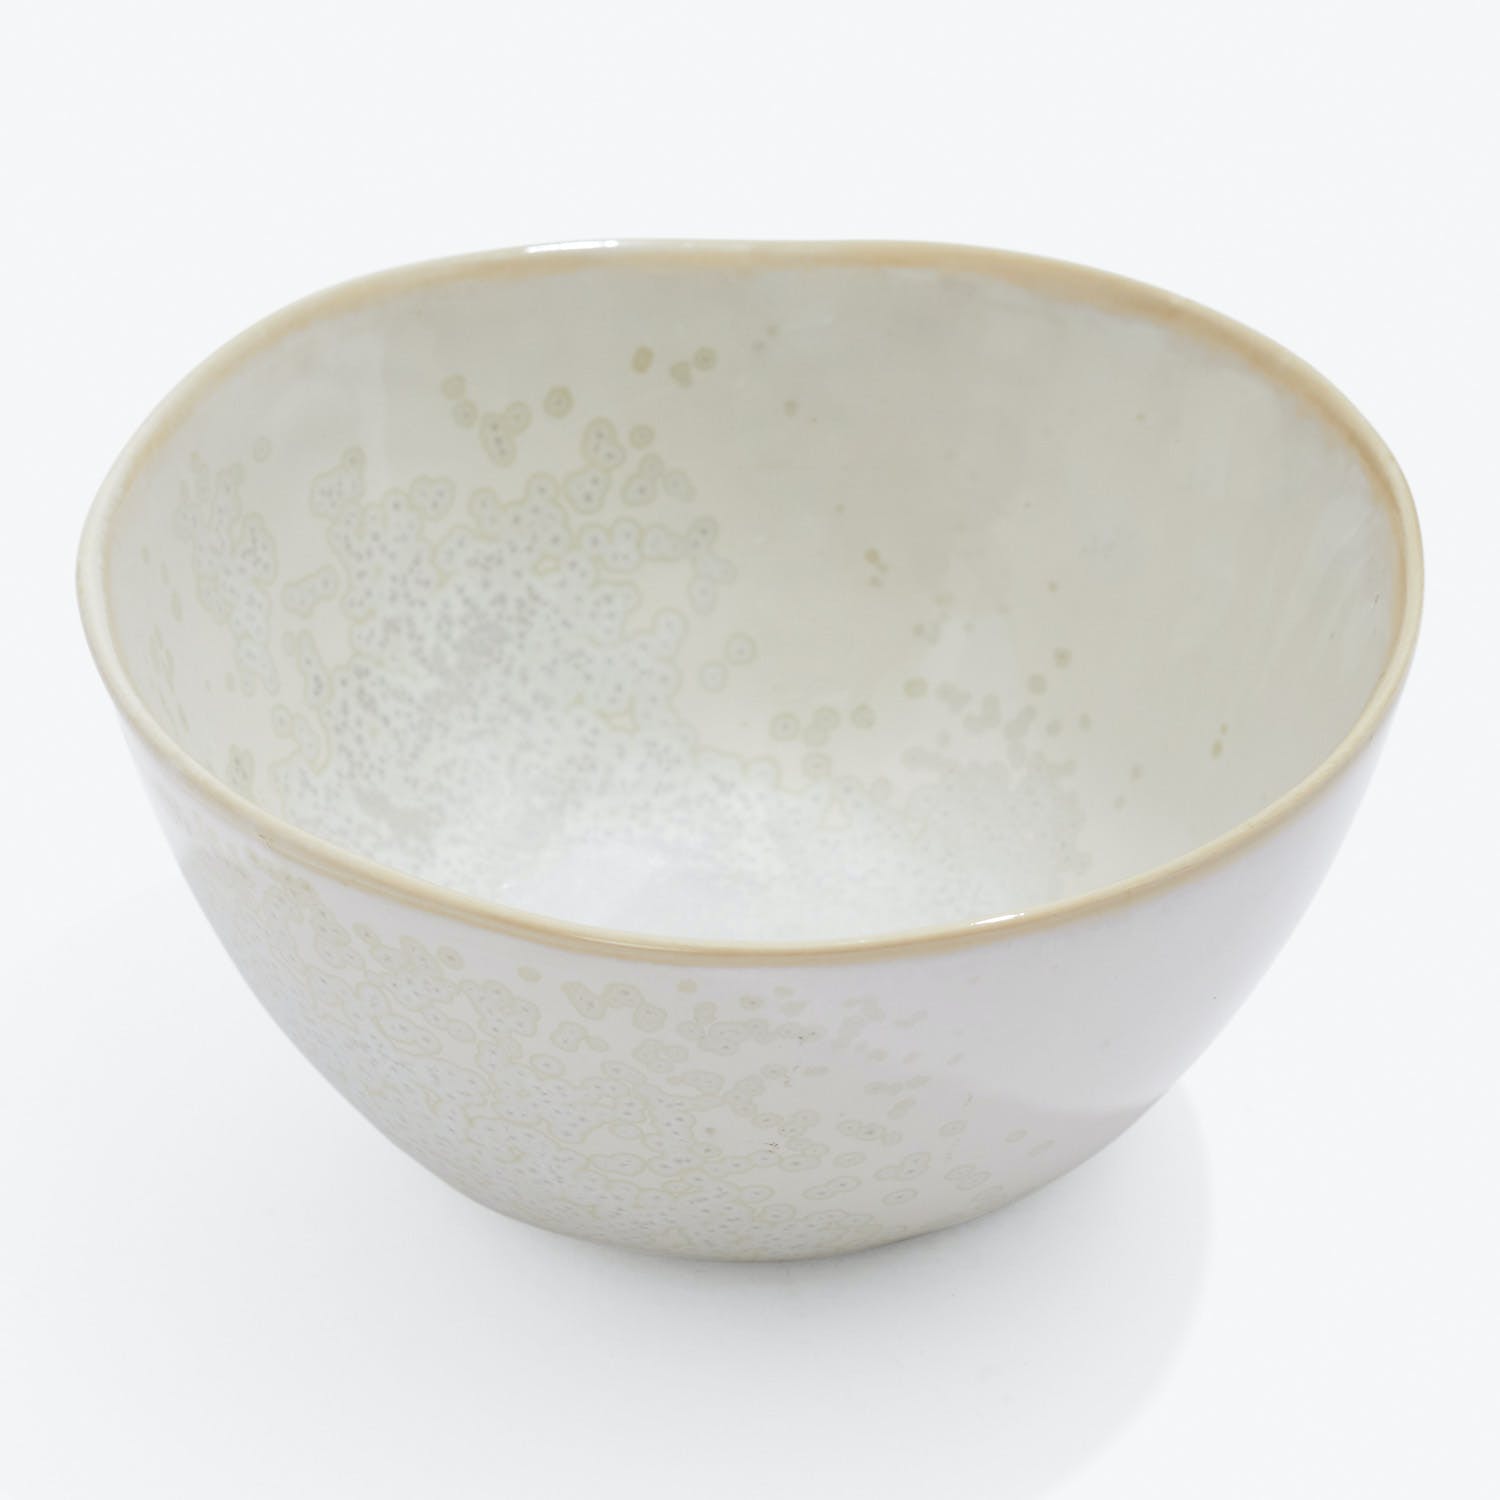 Minimalist ceramic bowl with delicate speckles and elegant gold trim